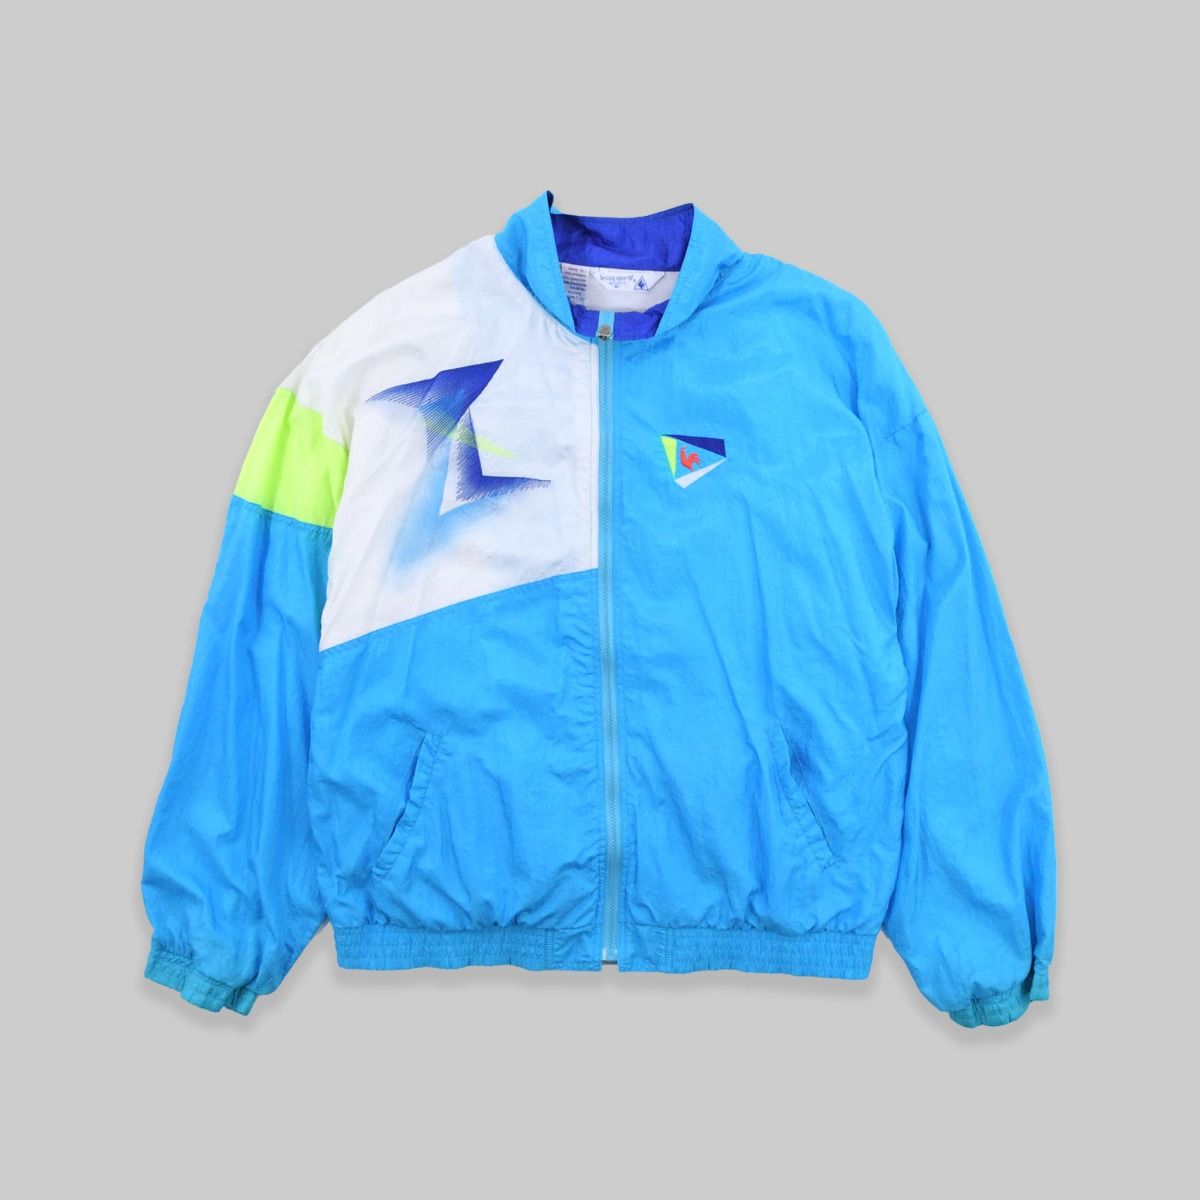 Le Coq Sportif 1990s Shell Jacket